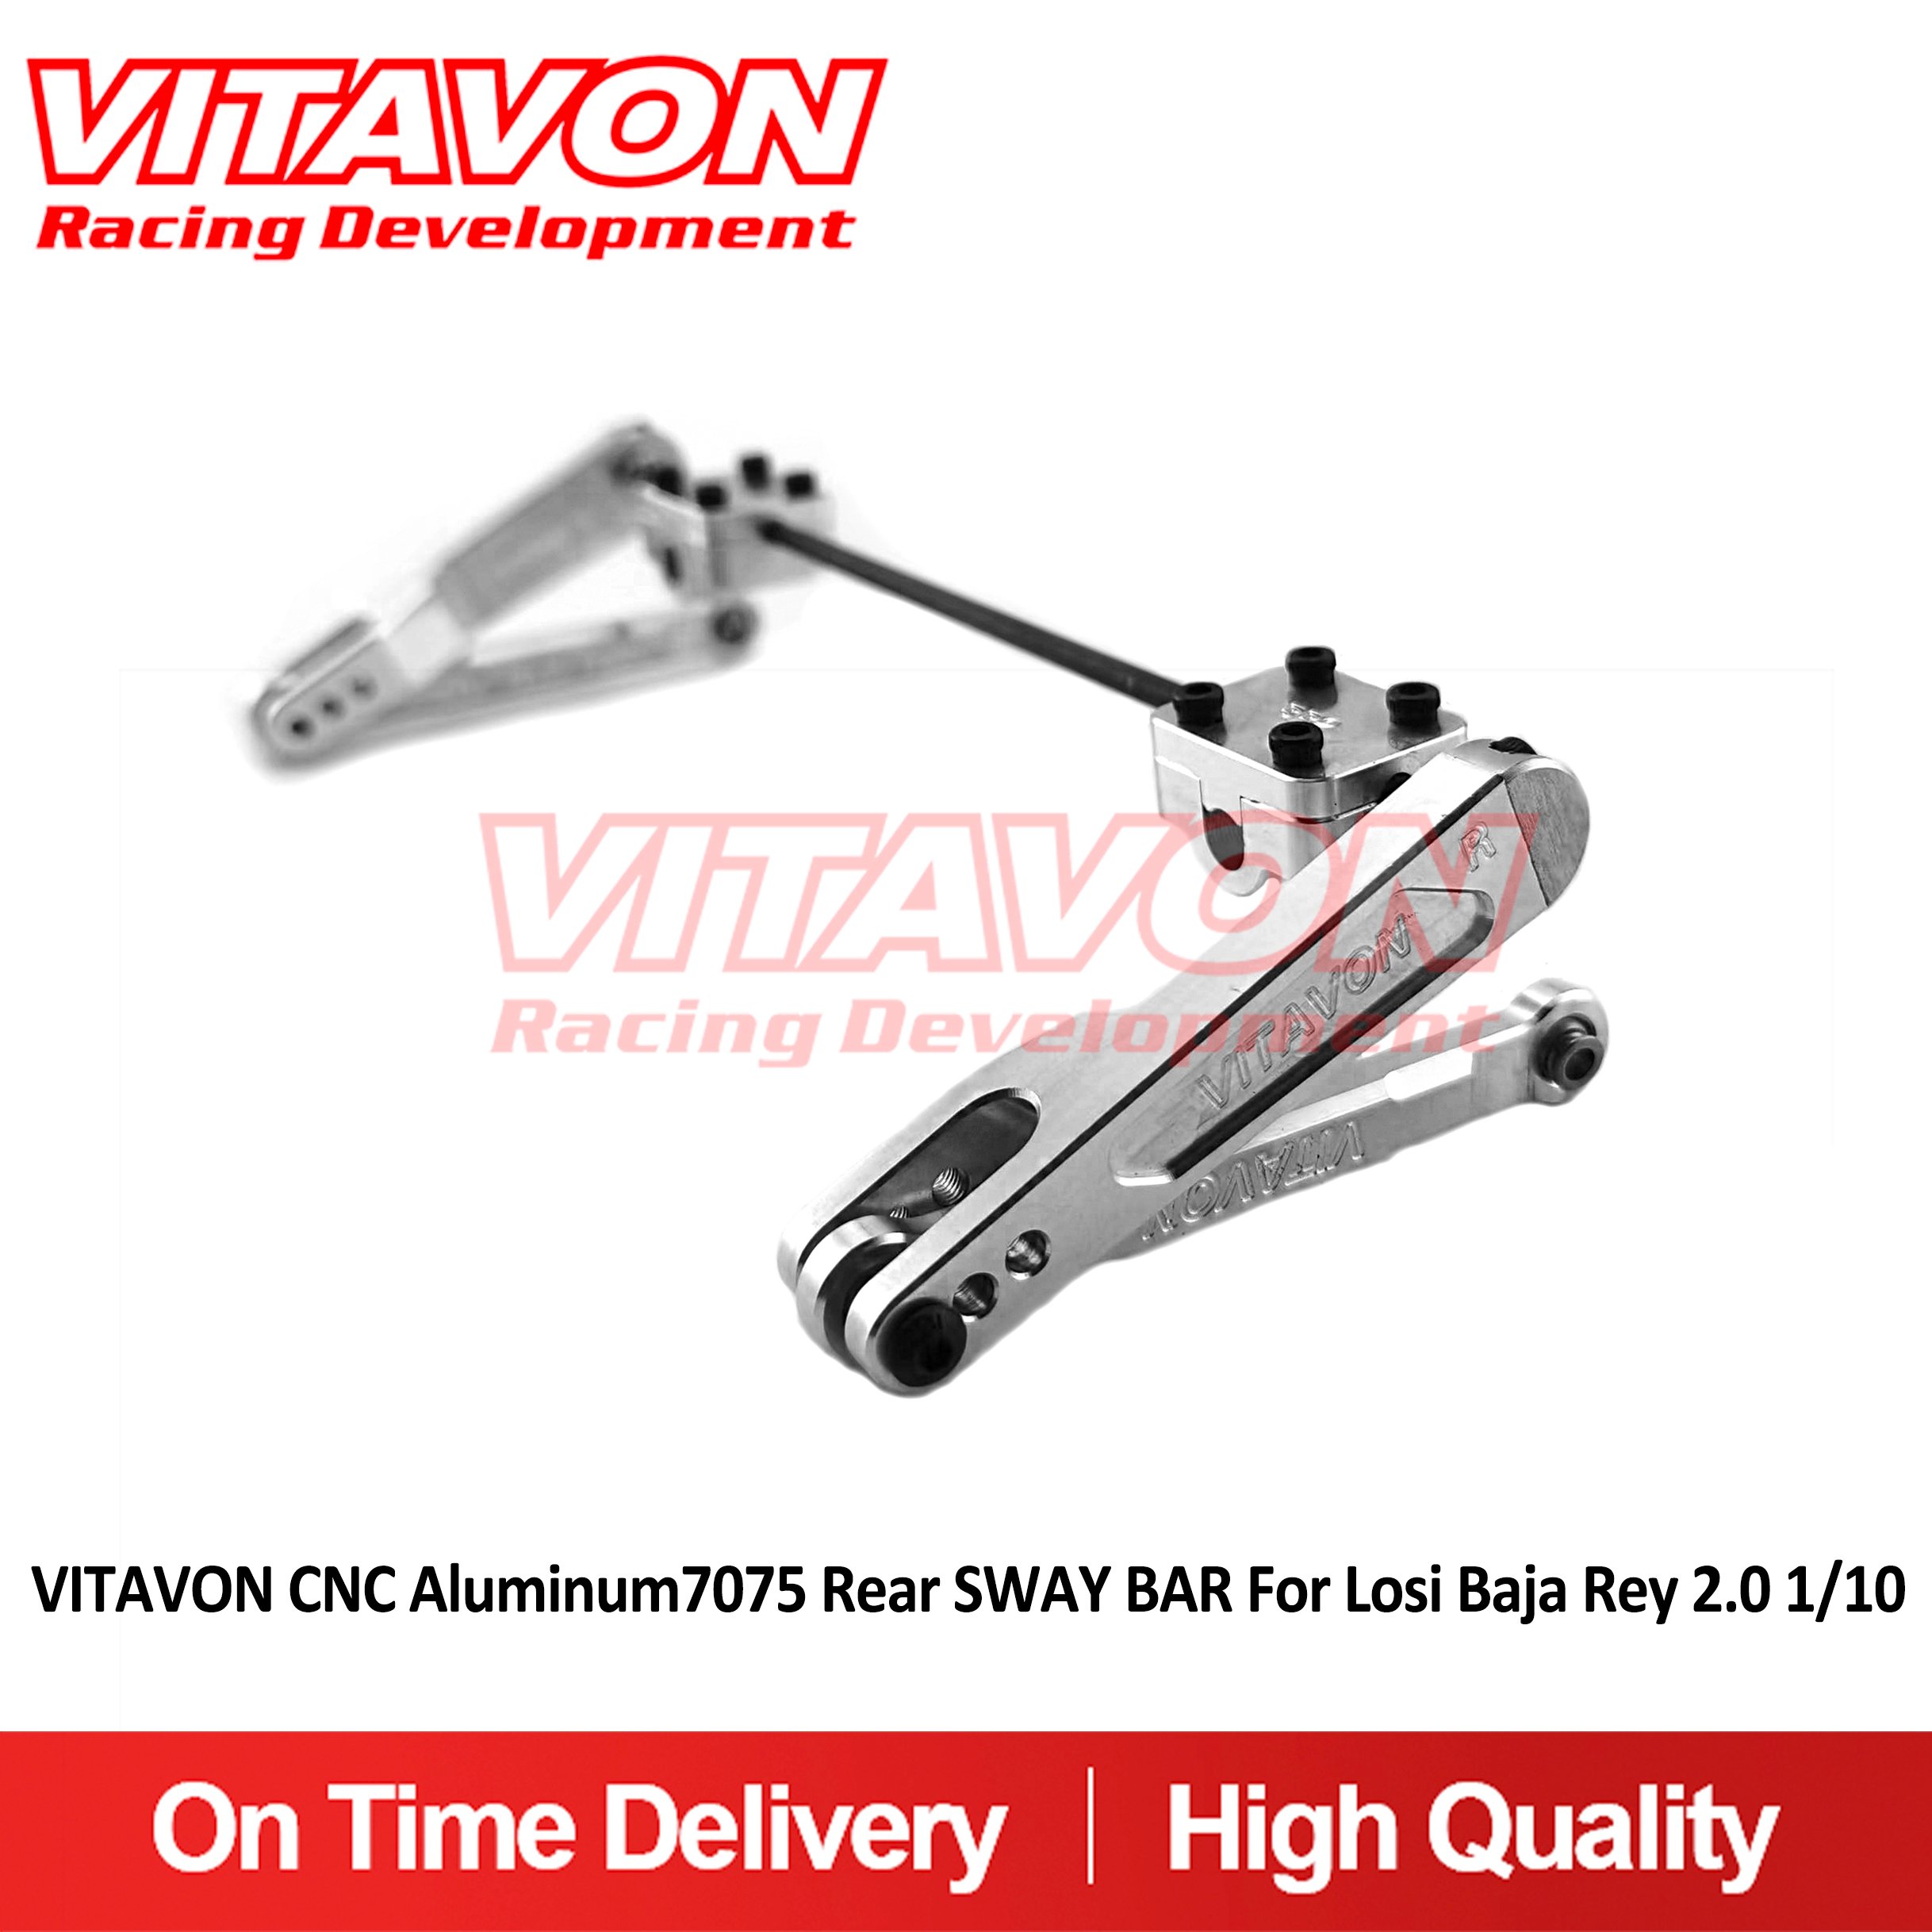 VITAVON CNC Aluminum7075 Rear SWAY BAR For Losi Baja Rey 2.0 1/10